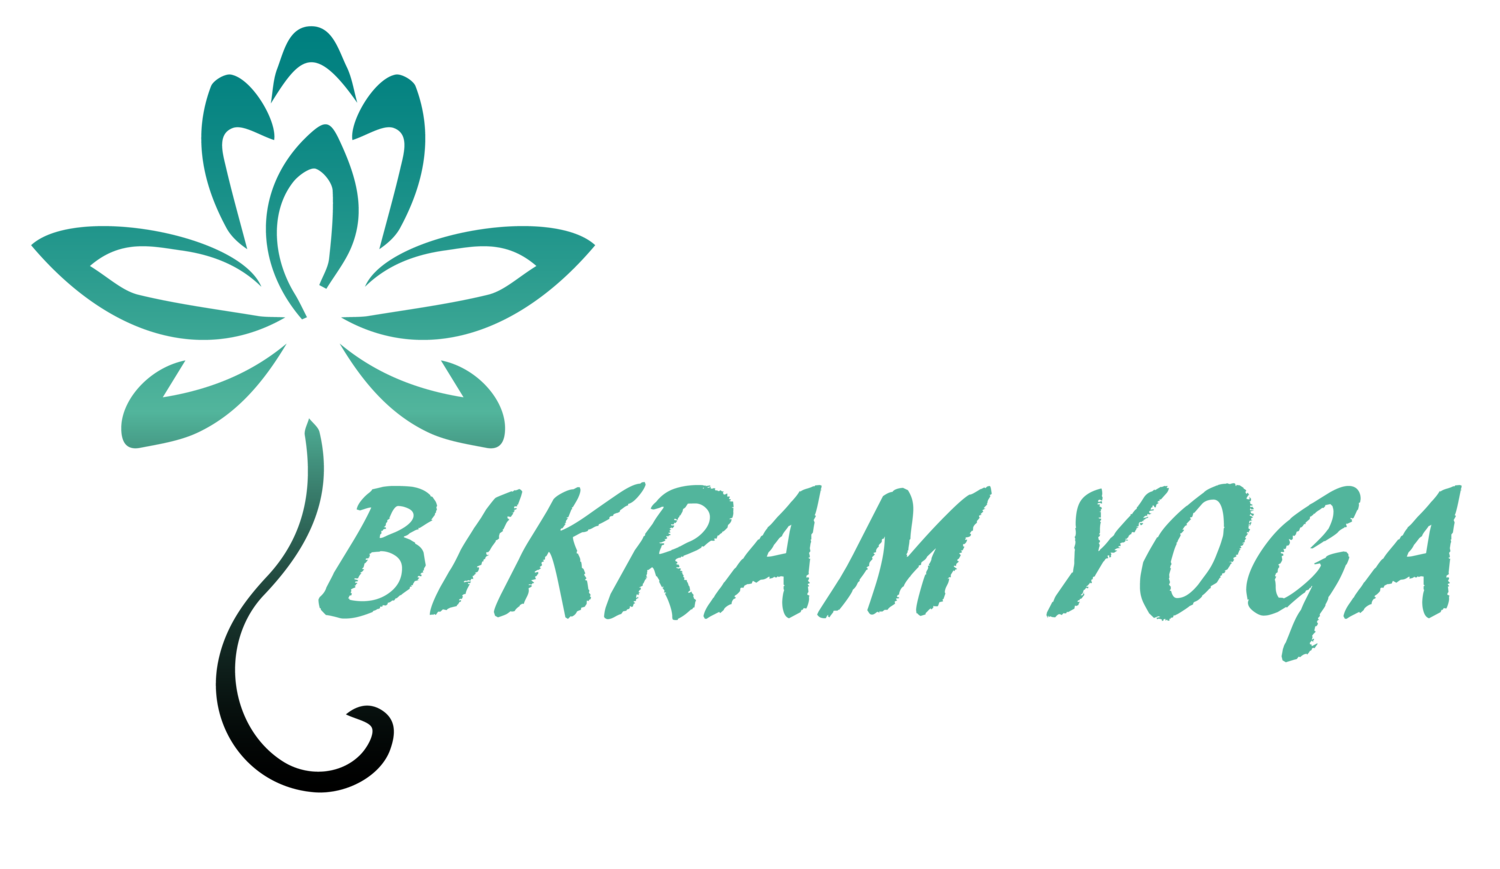 Bikram Yoga Lake County